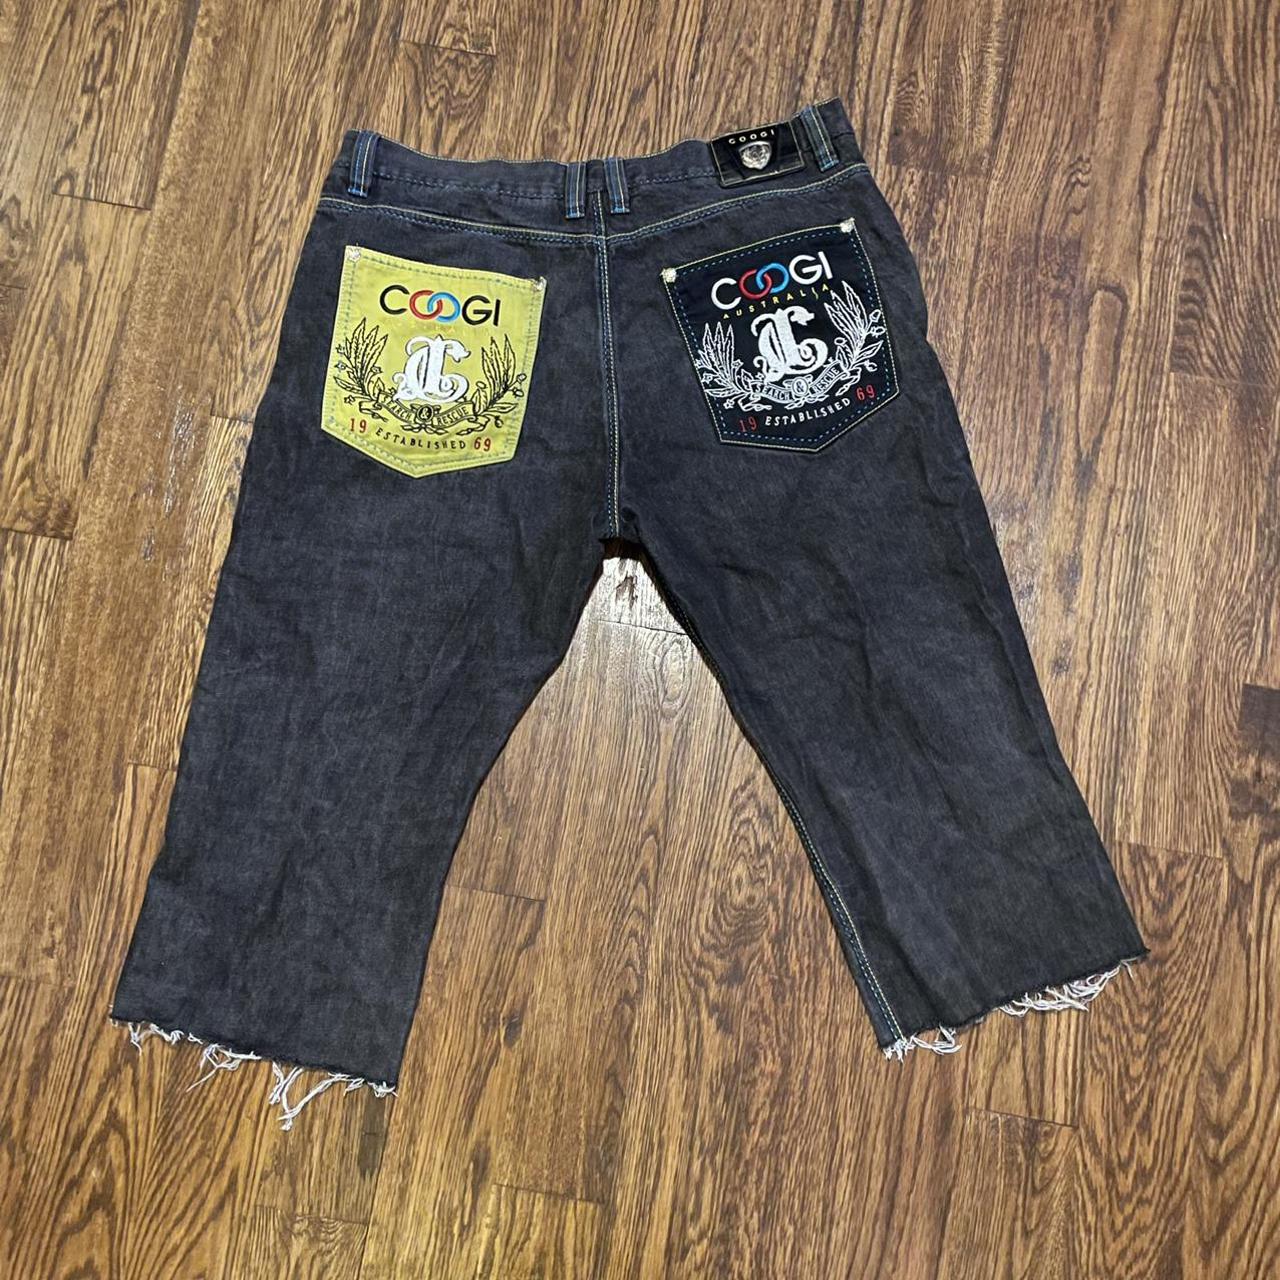 Coogi Men's Black Jeans